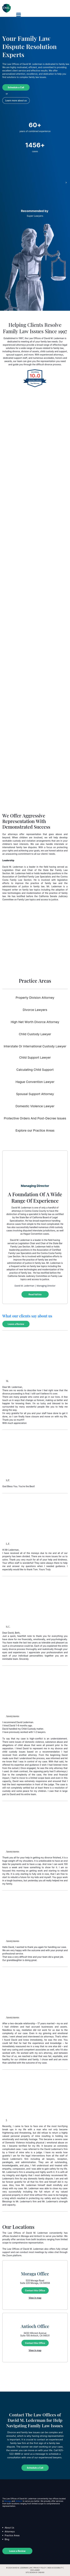 Law Offices of David M. Lederman - Walnut Creek CA Lawyers